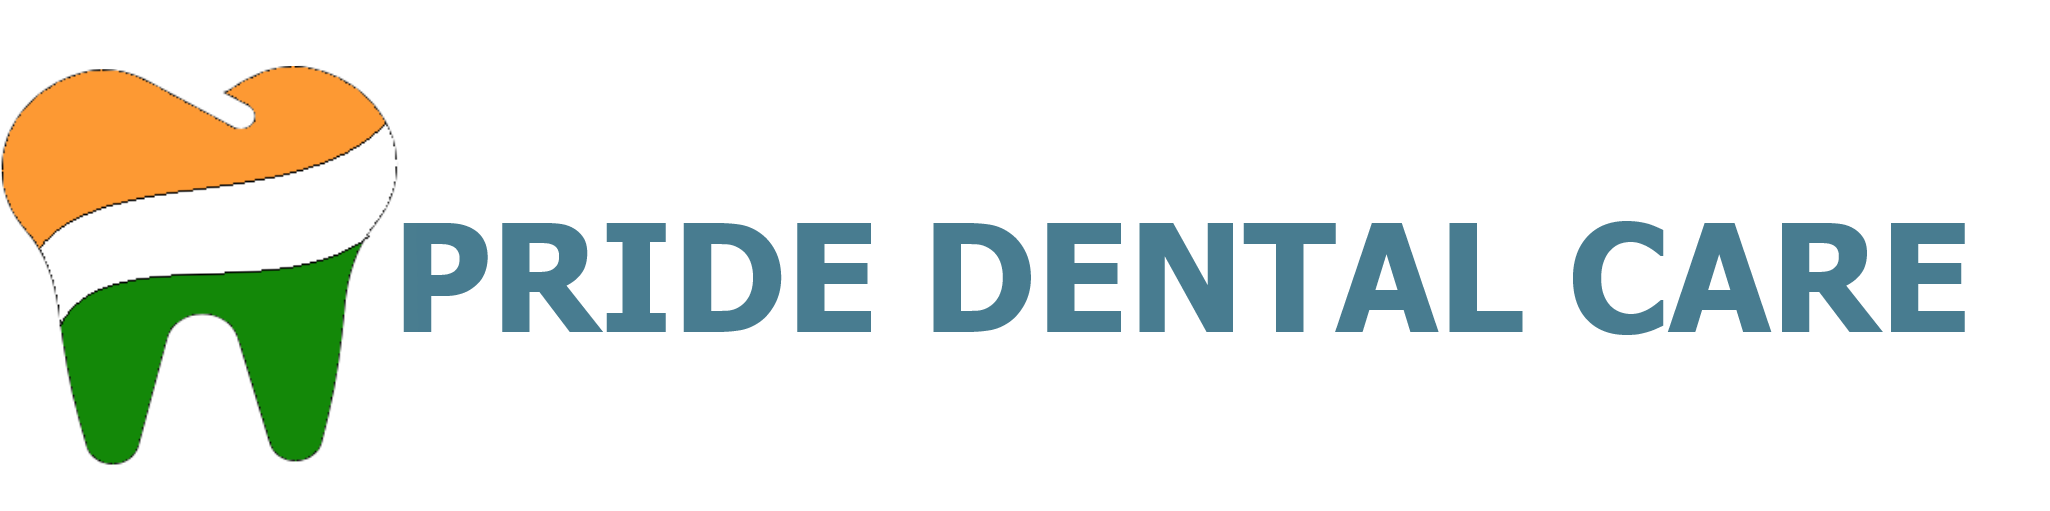 pride dental clinic